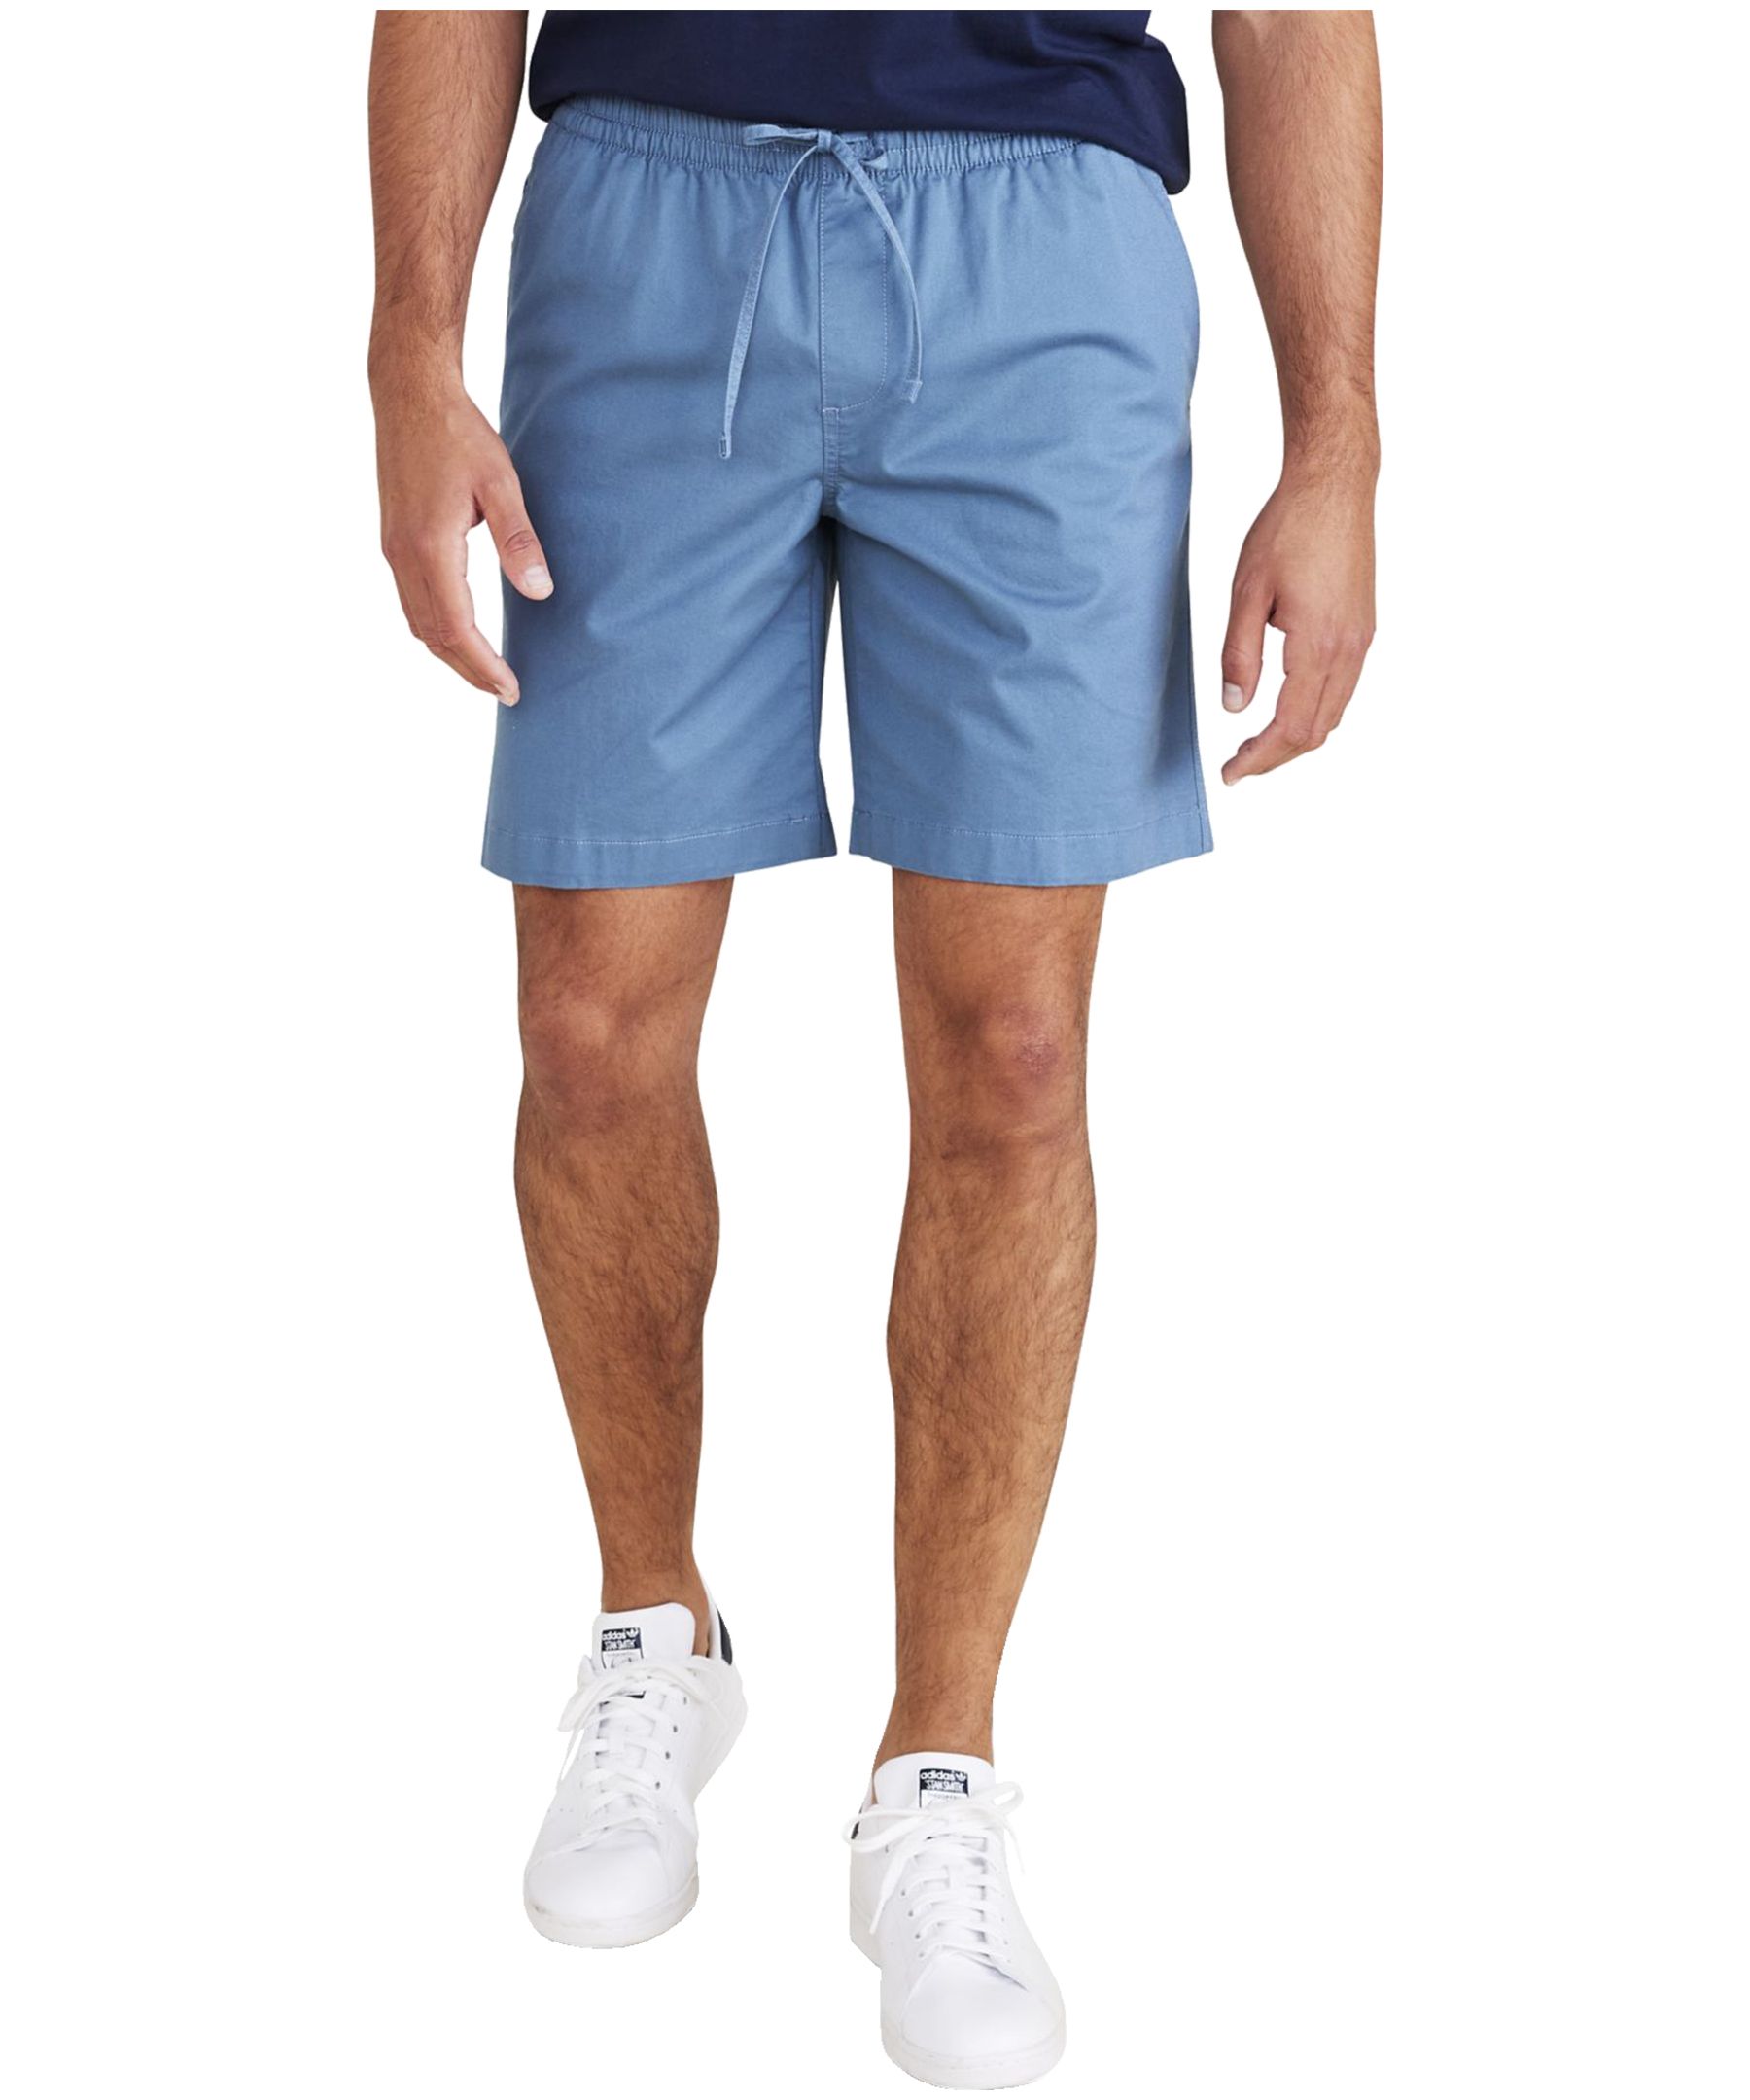 Dockers Men's Ultimate Supreme Flex Pull On Shorts